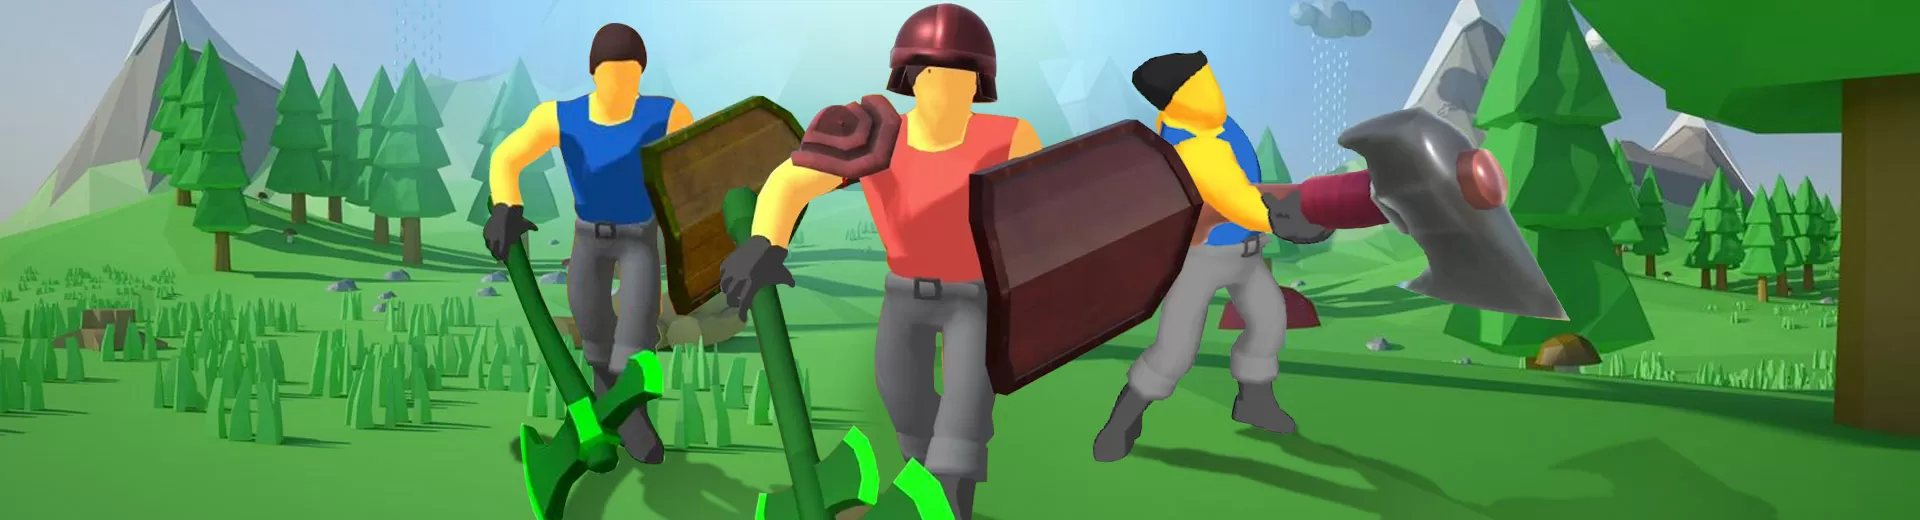 Lumbercraft emulator pc